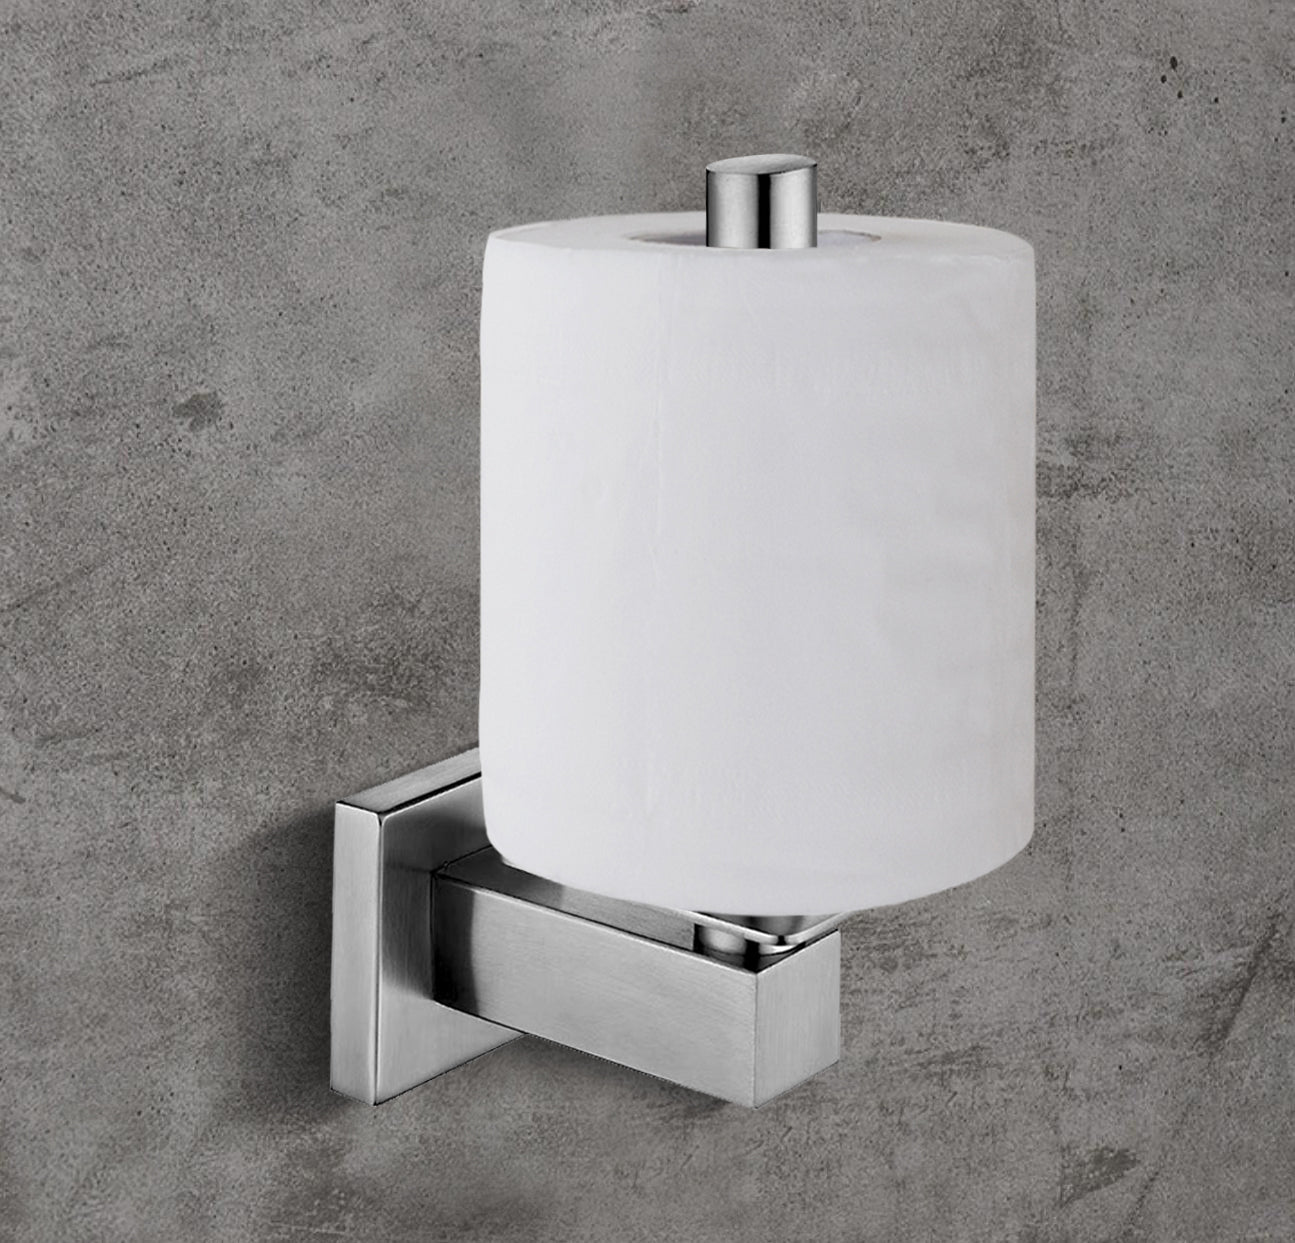 Adjustable Toilet Paper Holder Self-Adhesive Kitchen Toilet Roll